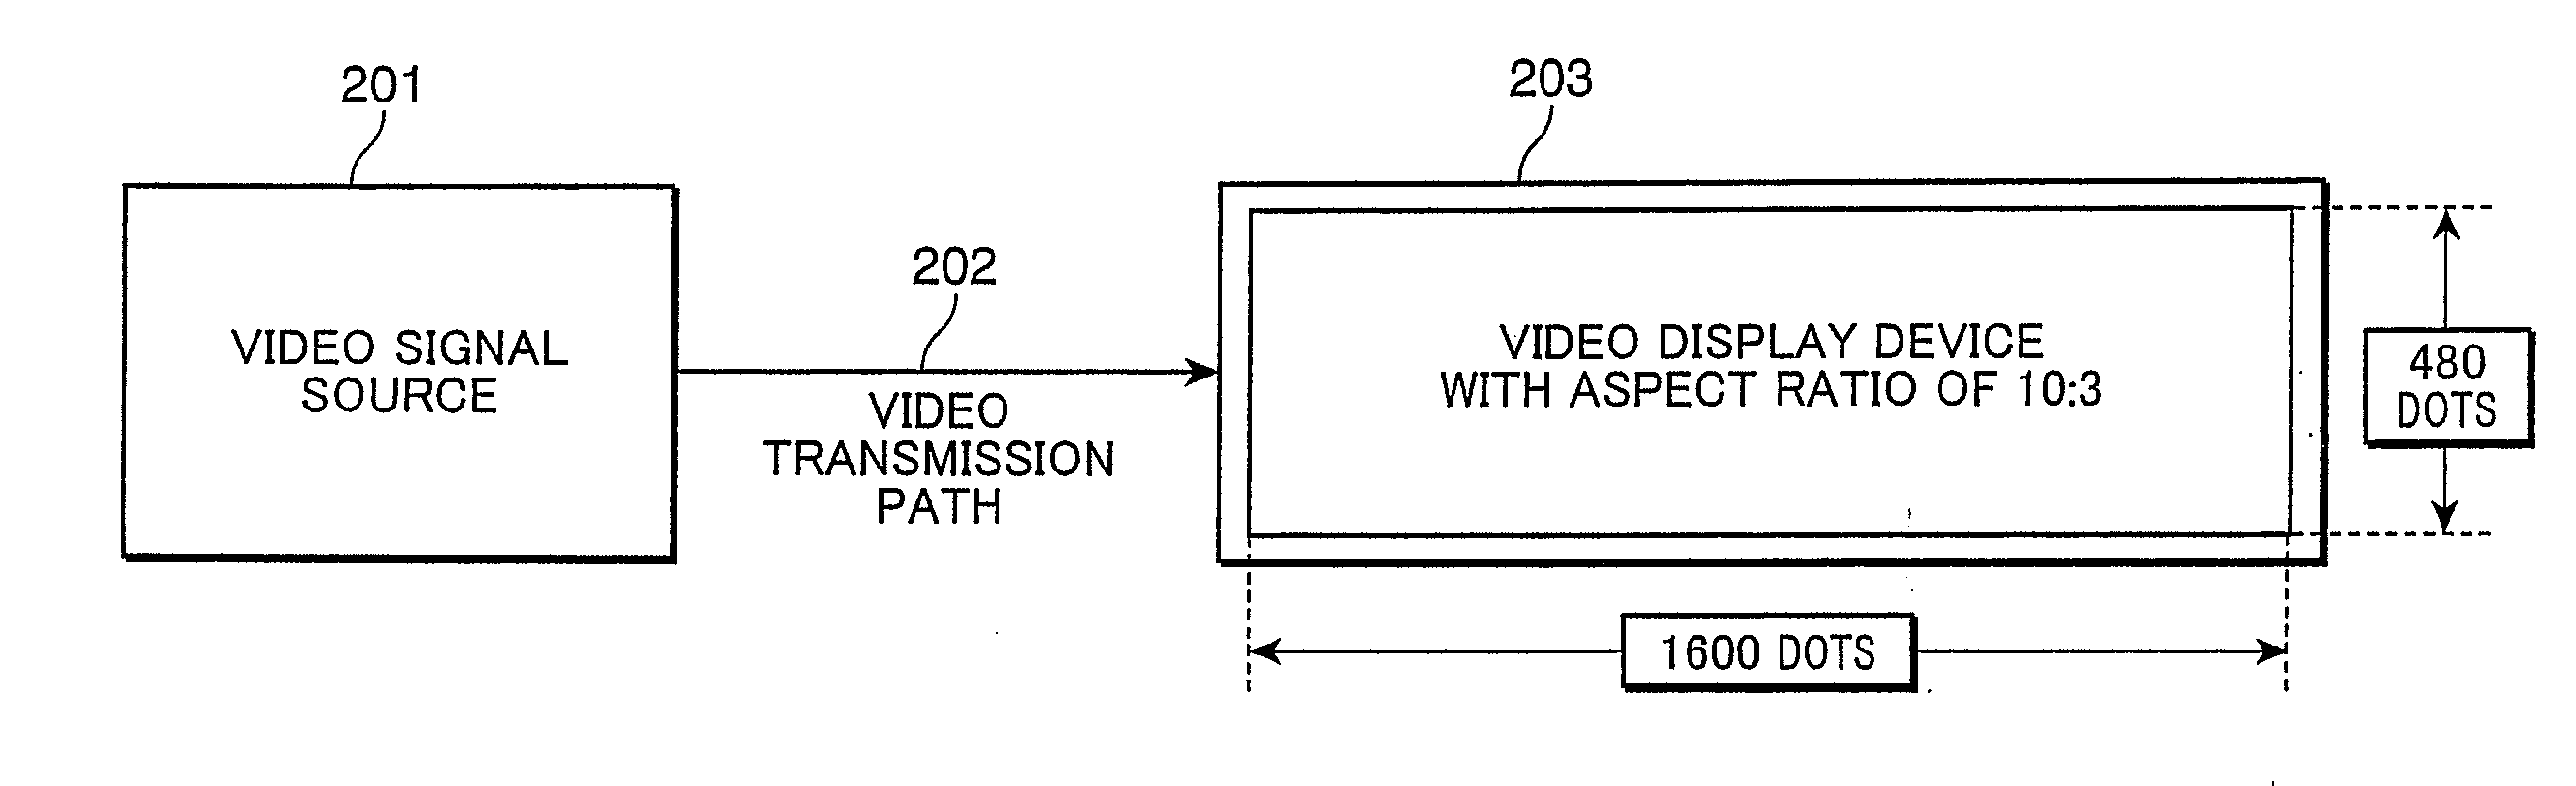 Video display device